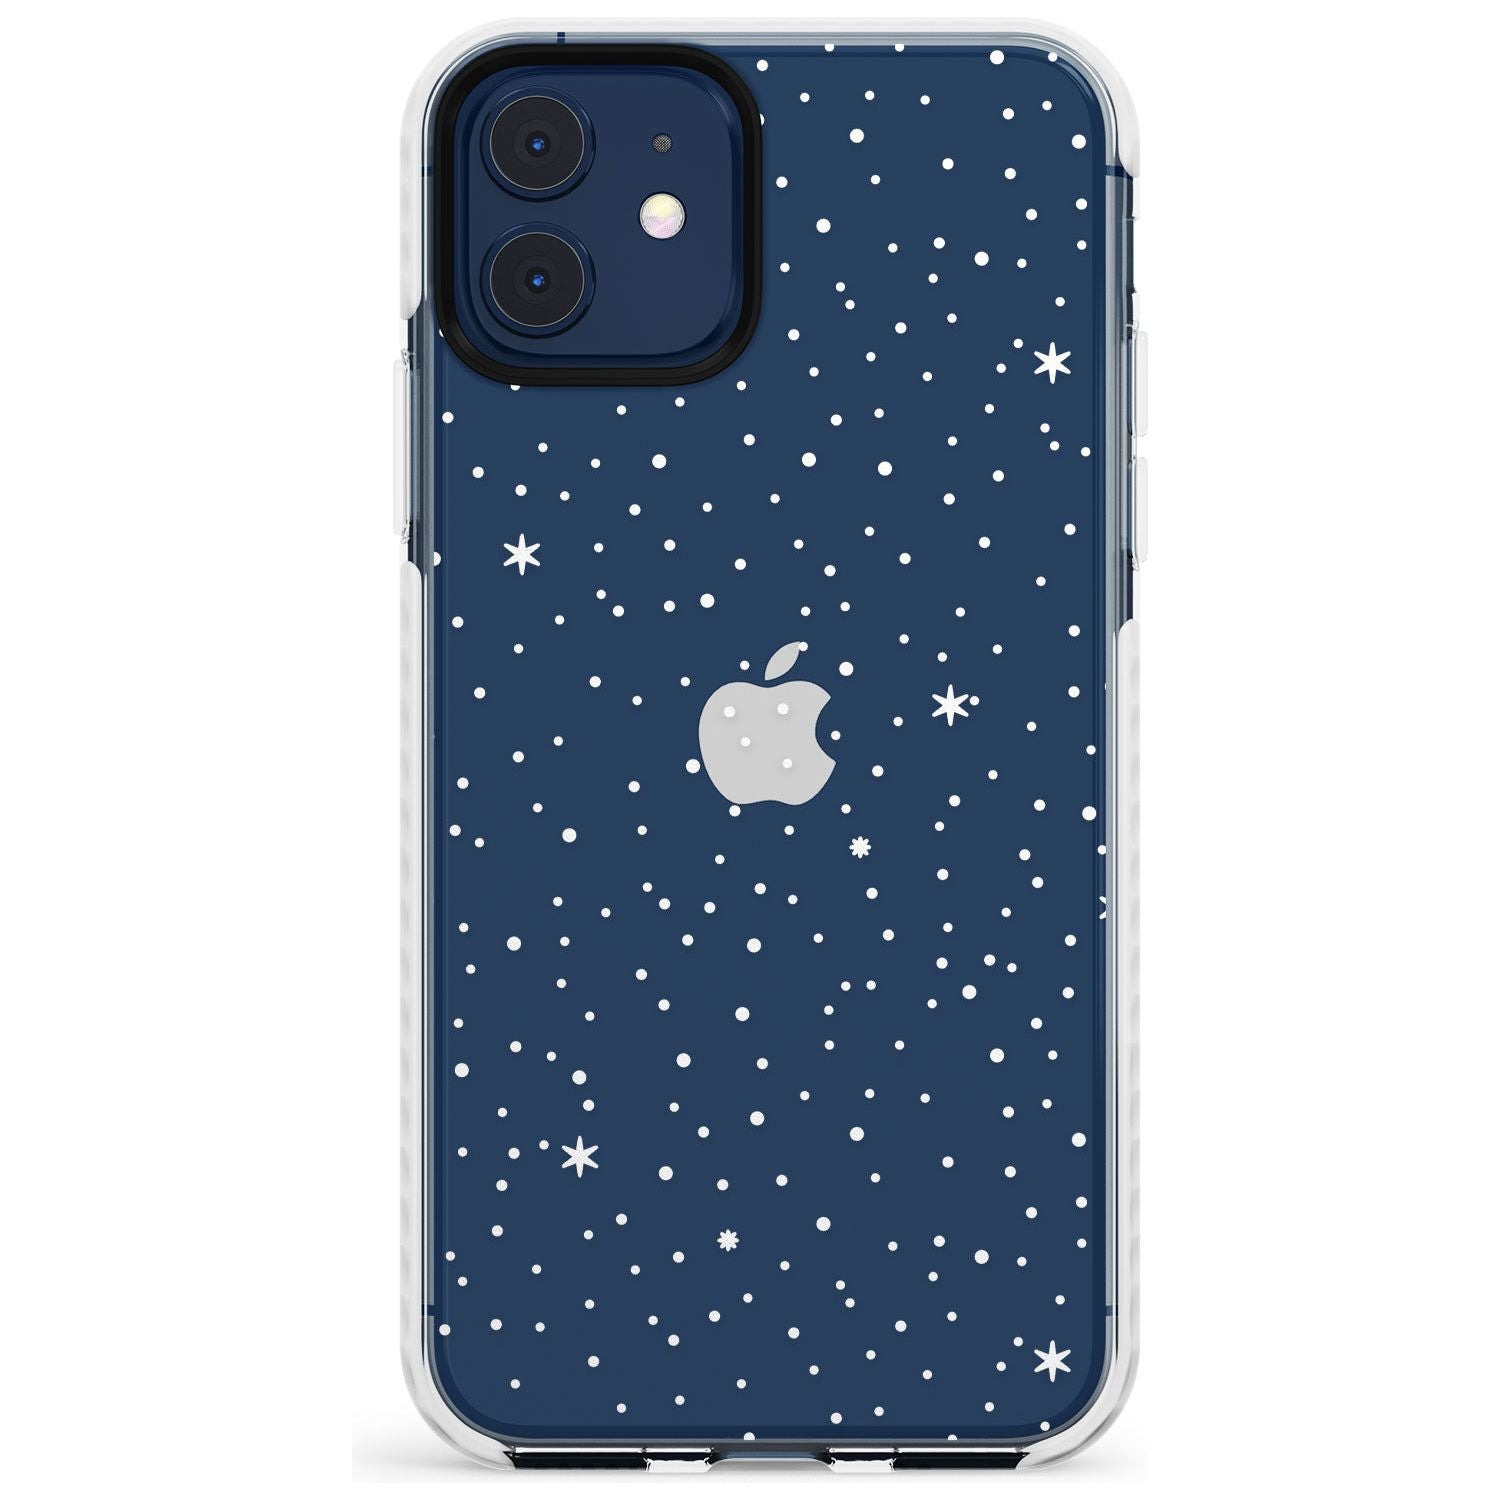 Celestial Starry Sky White Slim TPU Phone Case for iPhone 11